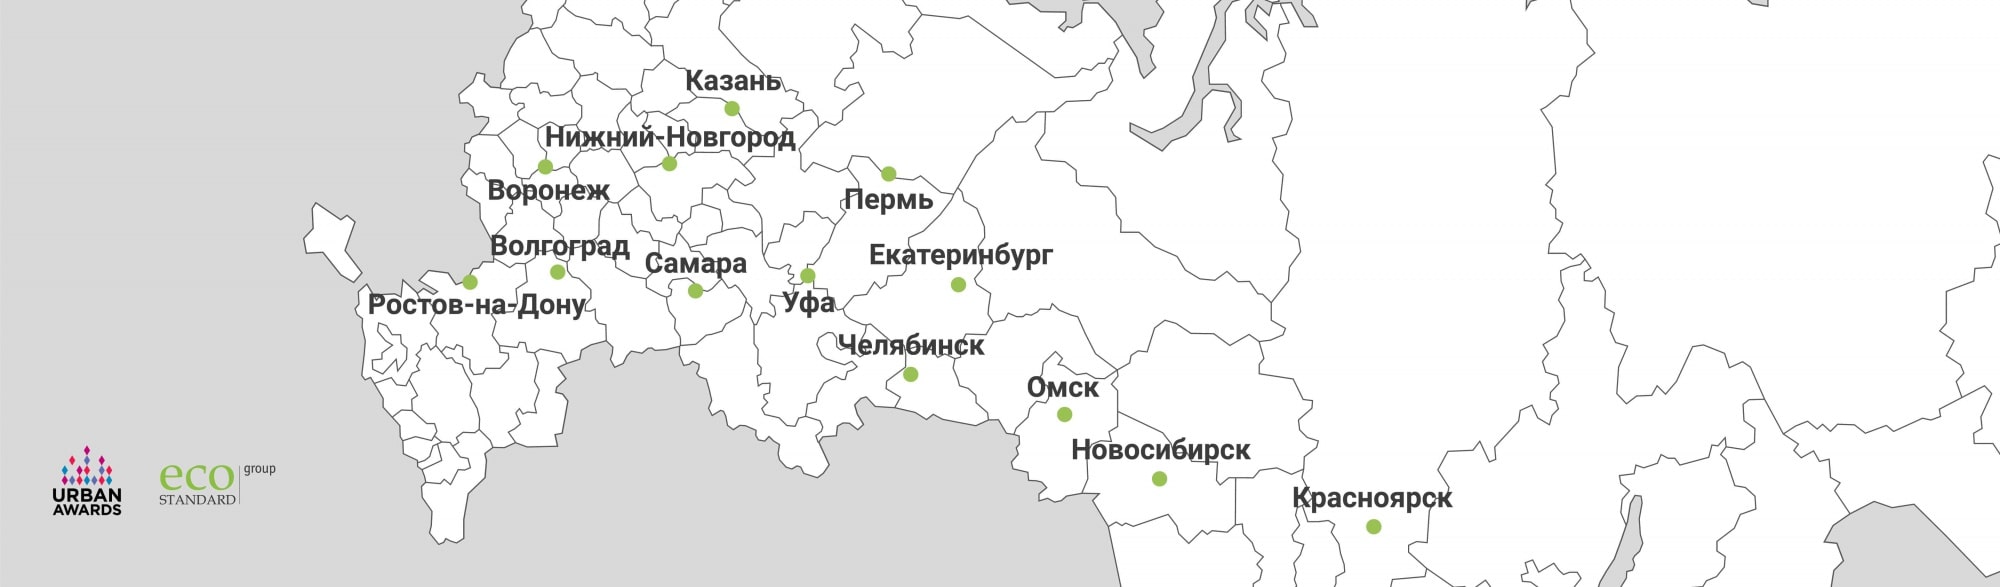 Экостандарт Красноярск. Карта екатеринбурга волгоградская